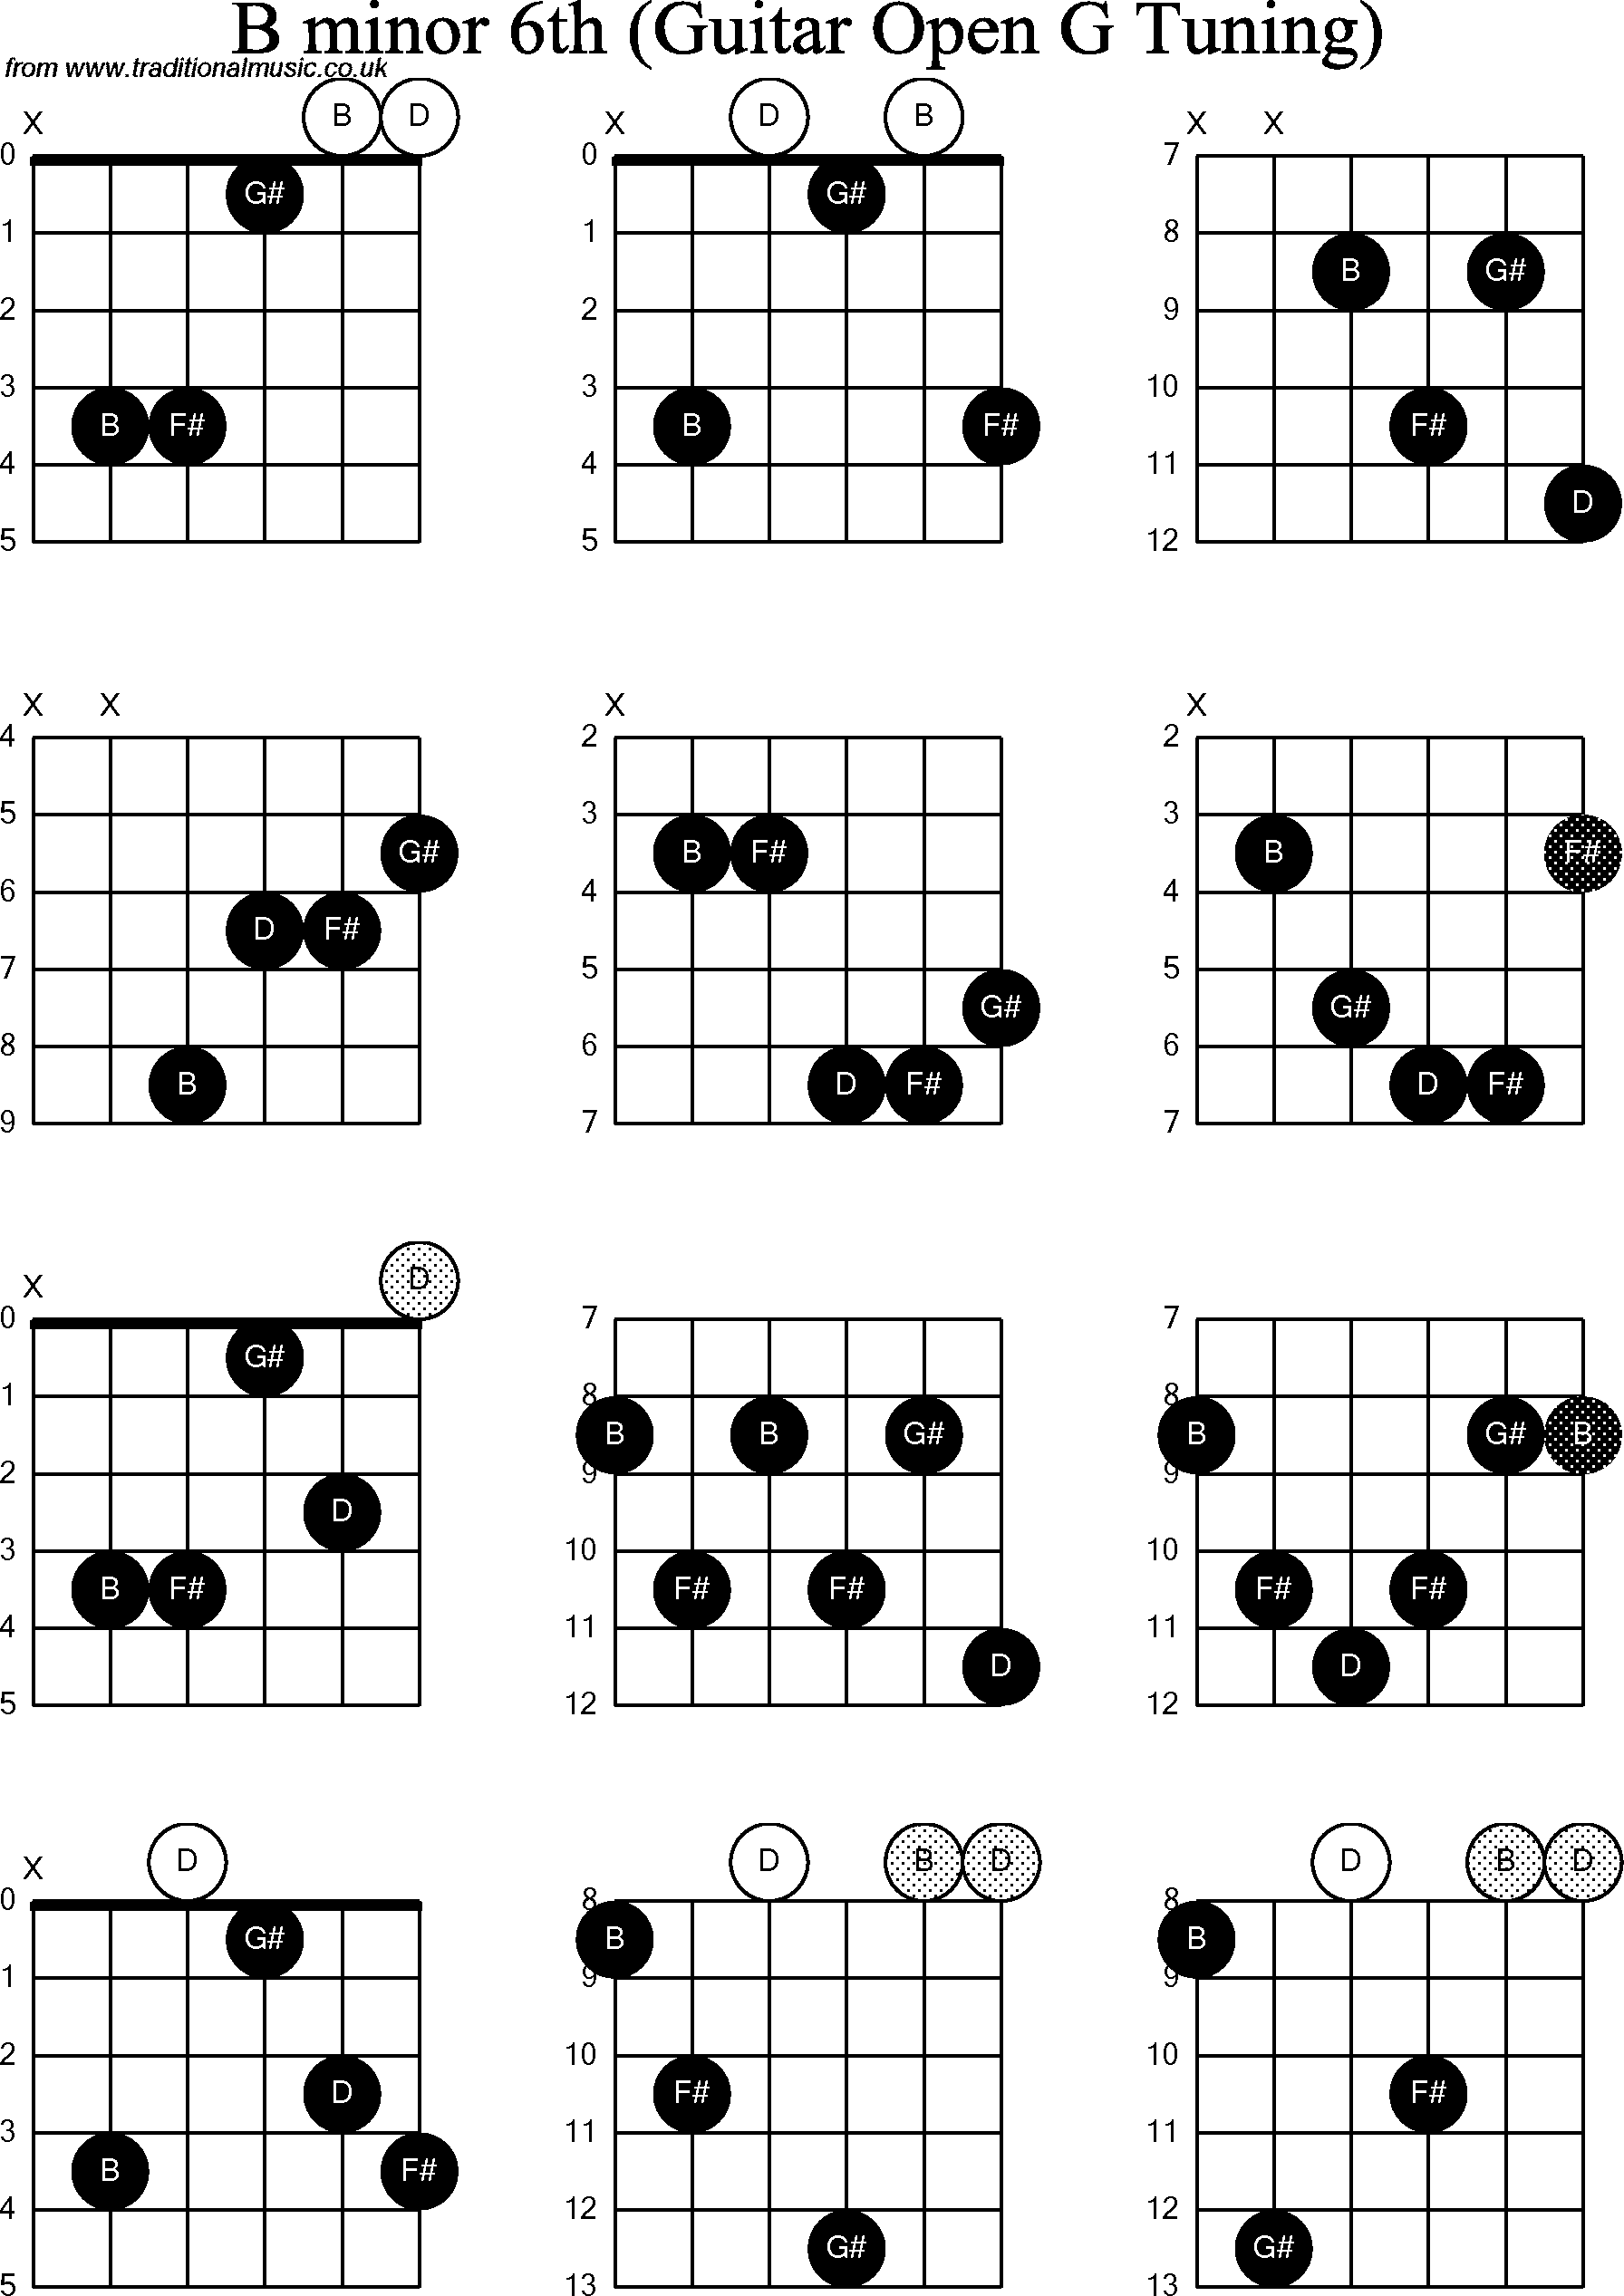 Chord diagrams for: Dobro B Minor6th